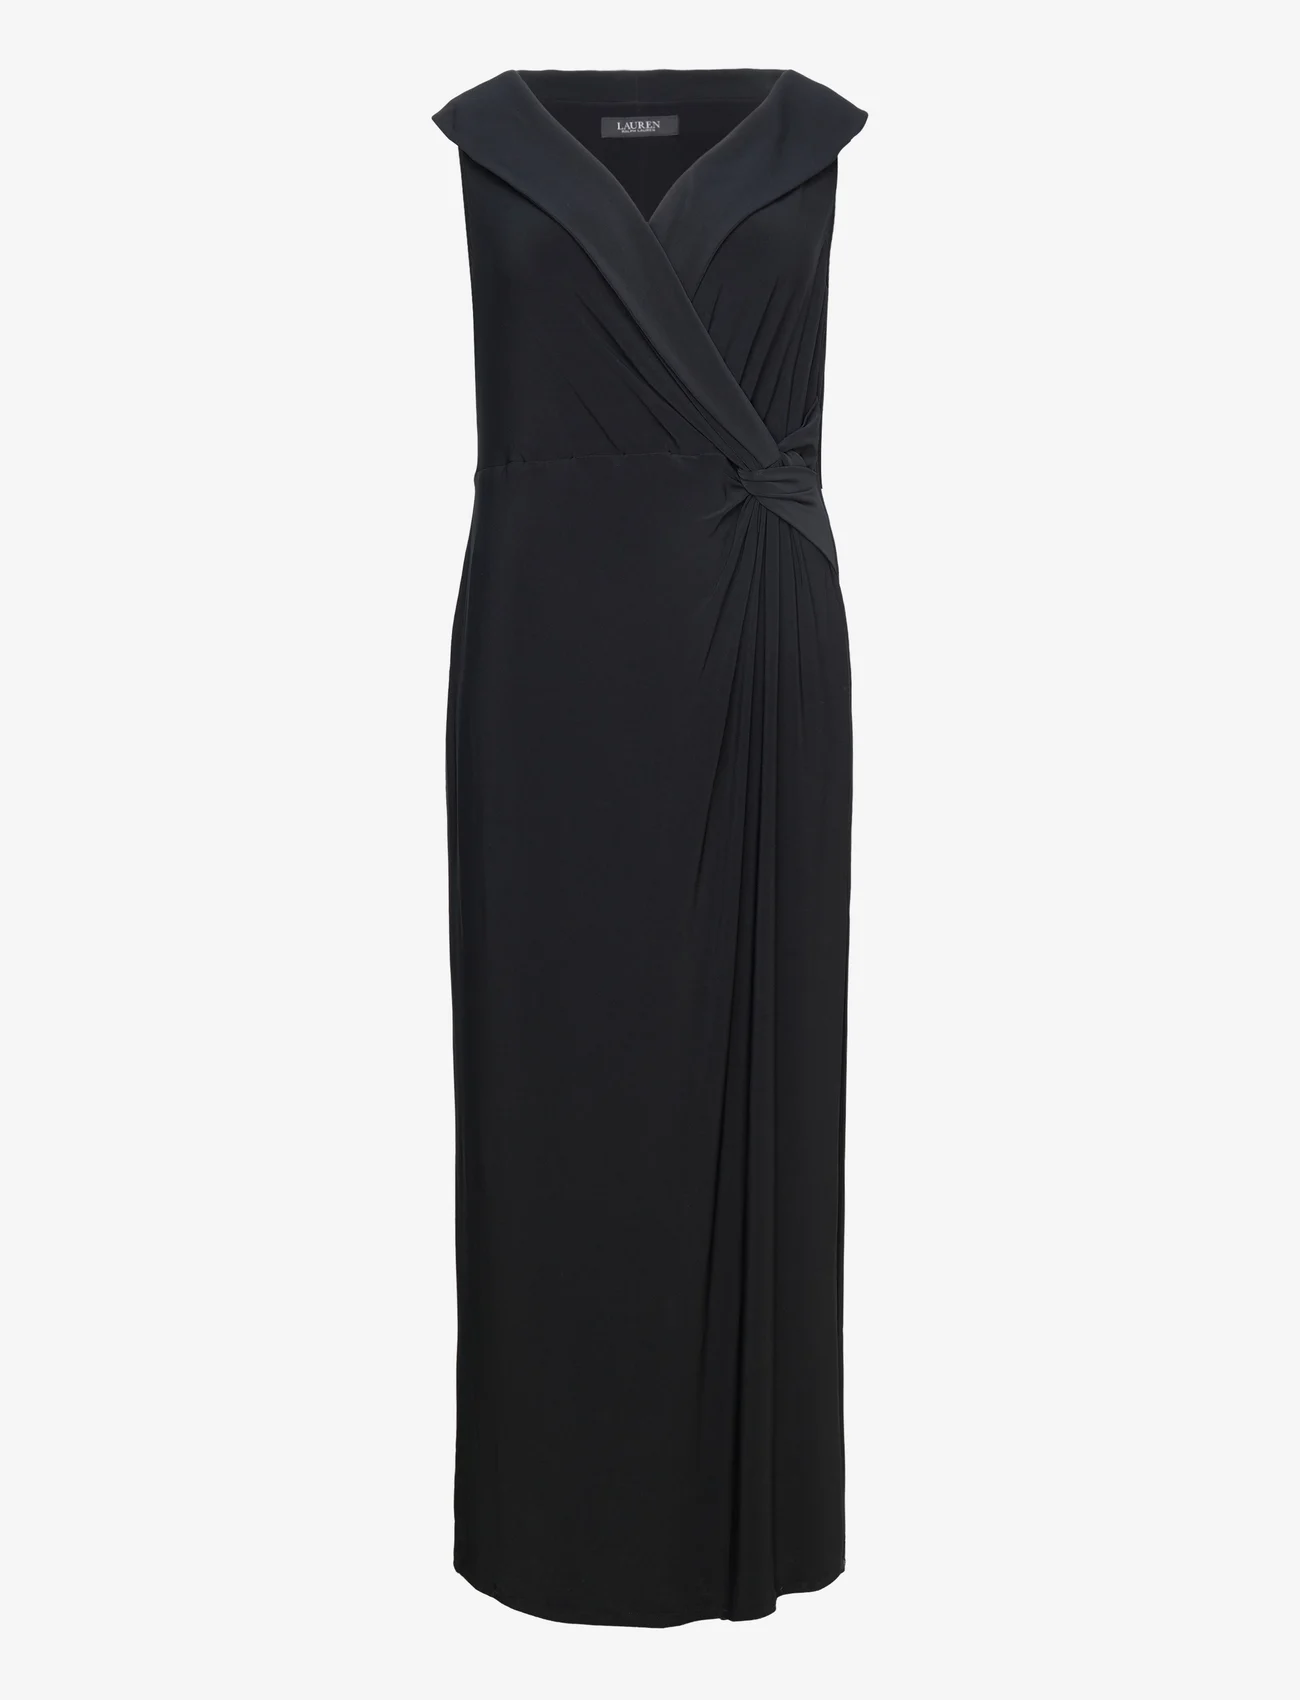 Lauren Women - Jersey Off-the-Shoulder Gown - ballīšu apģērbs par outlet cenām - black - 0